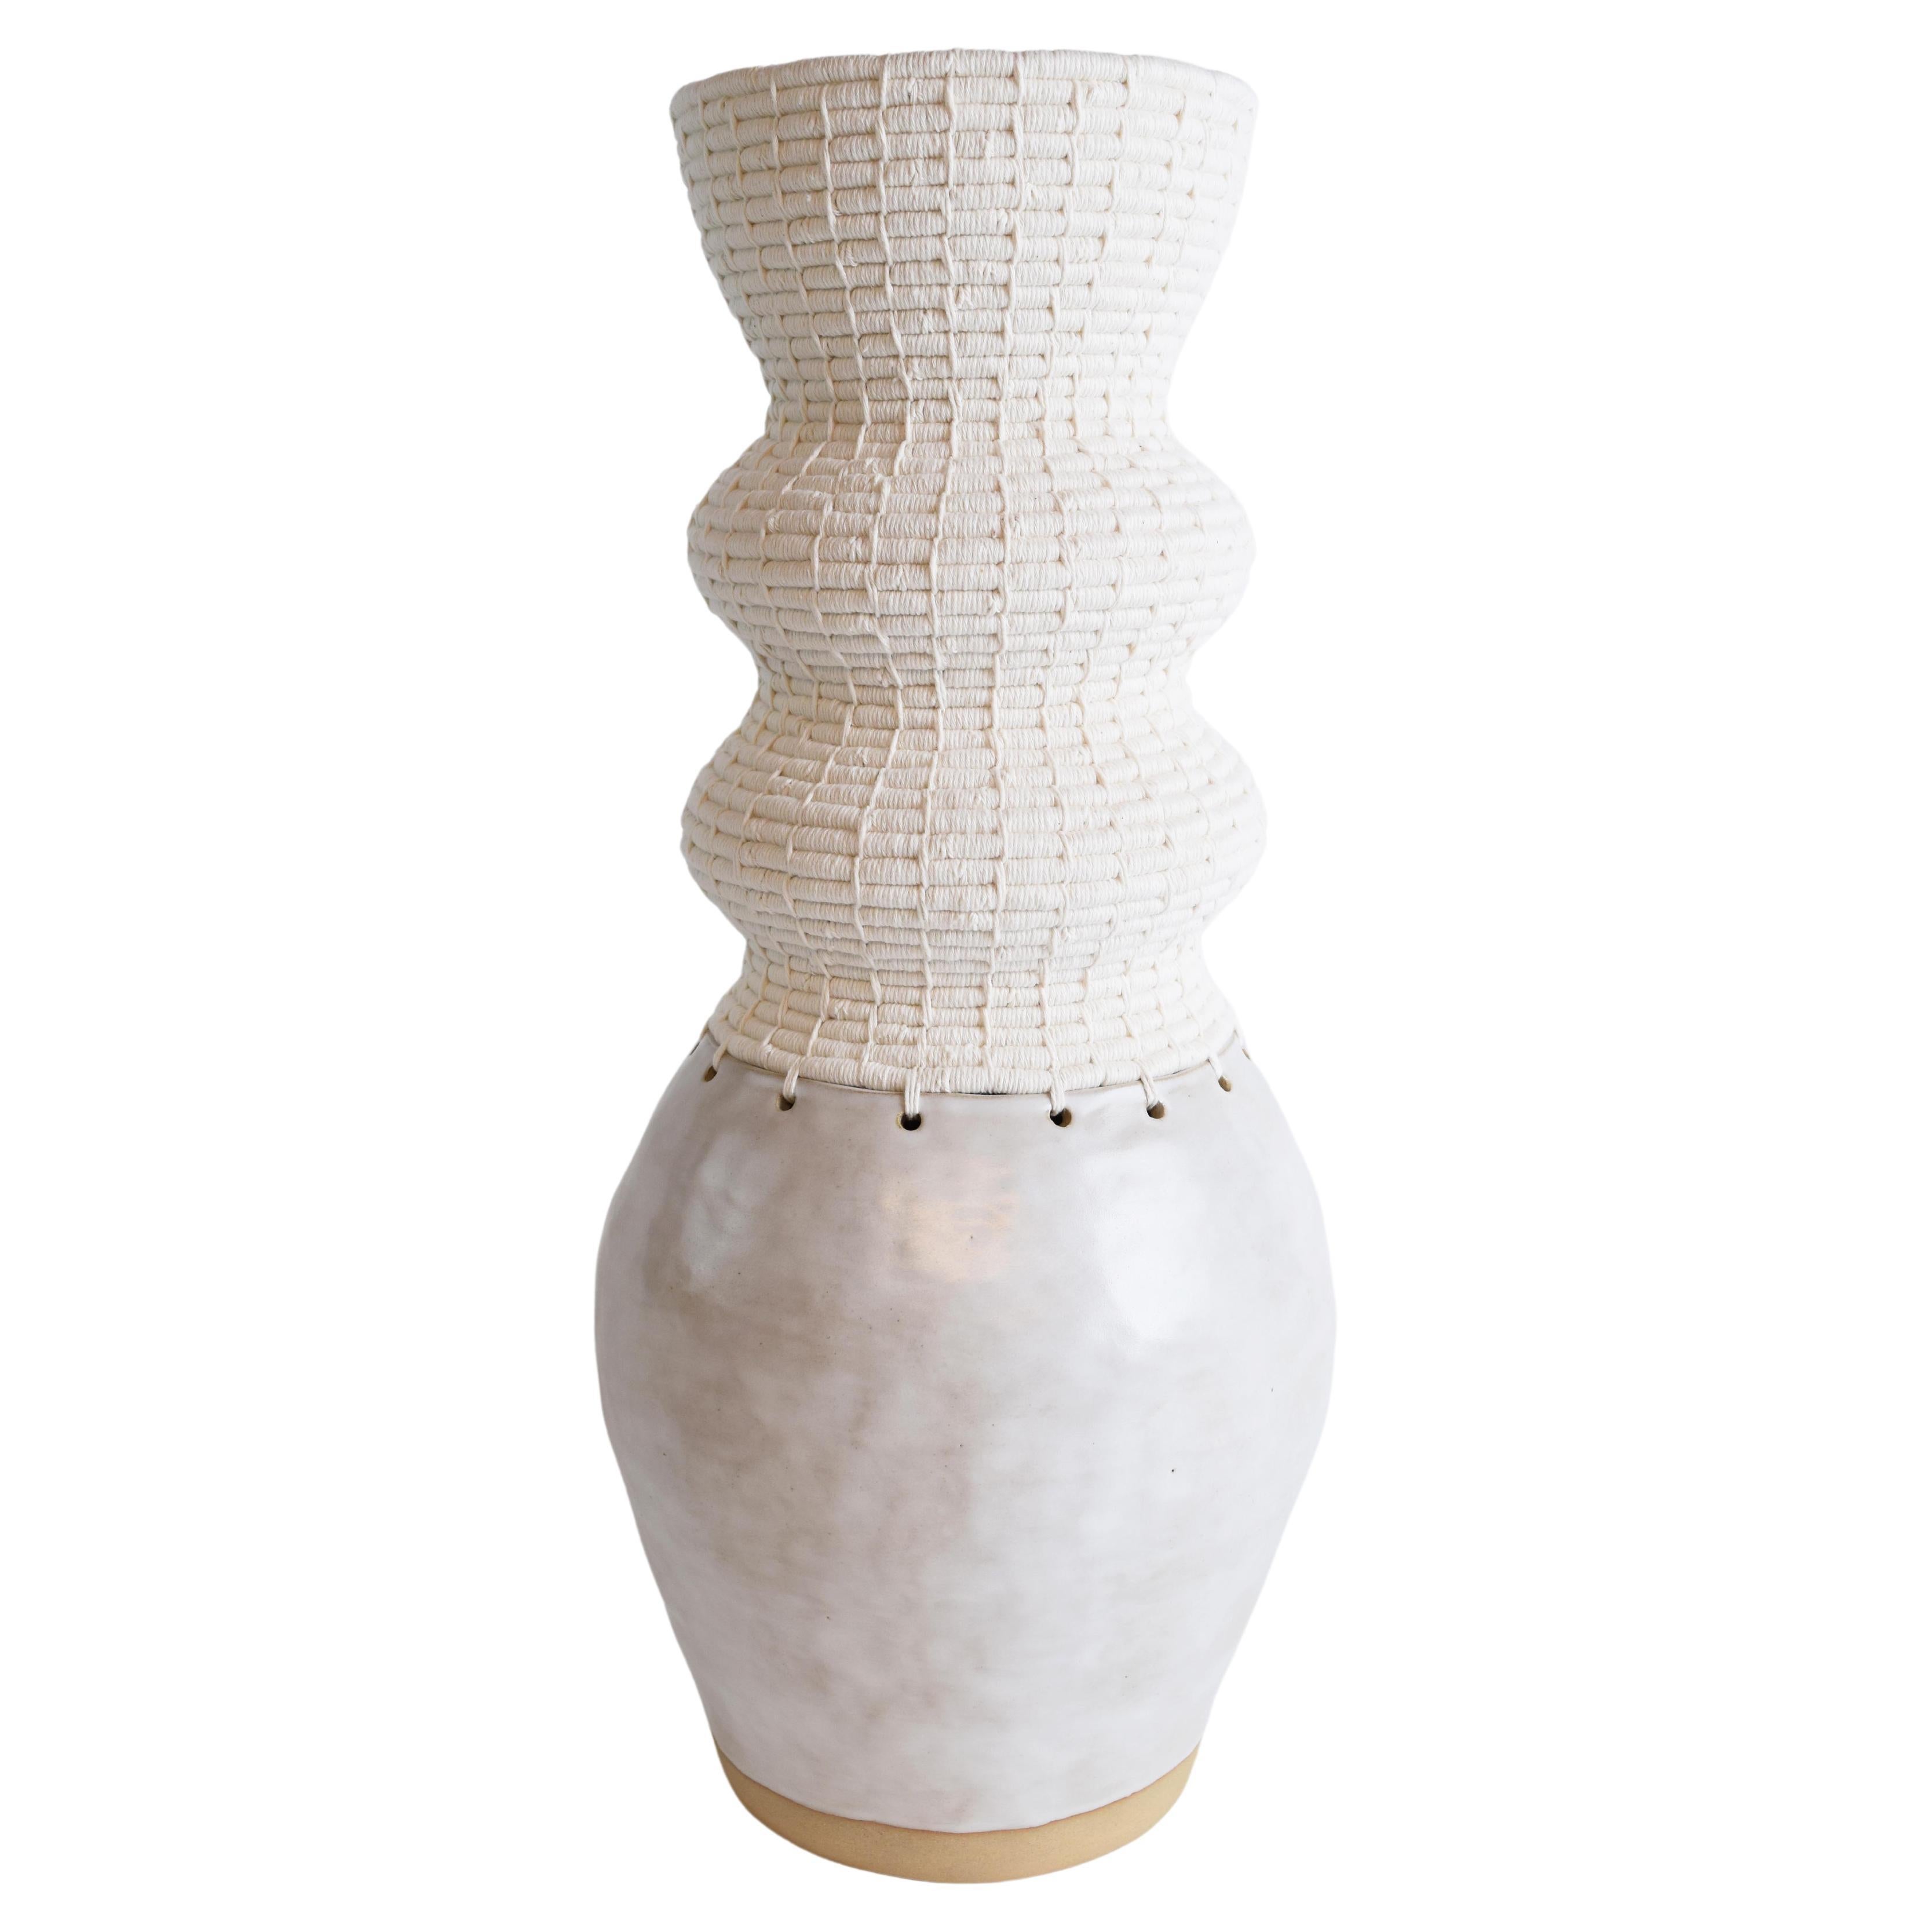 One of a Kind Ceramic & Fiber Vessel #813  - White Glaze and White Woven Cotton For Sale